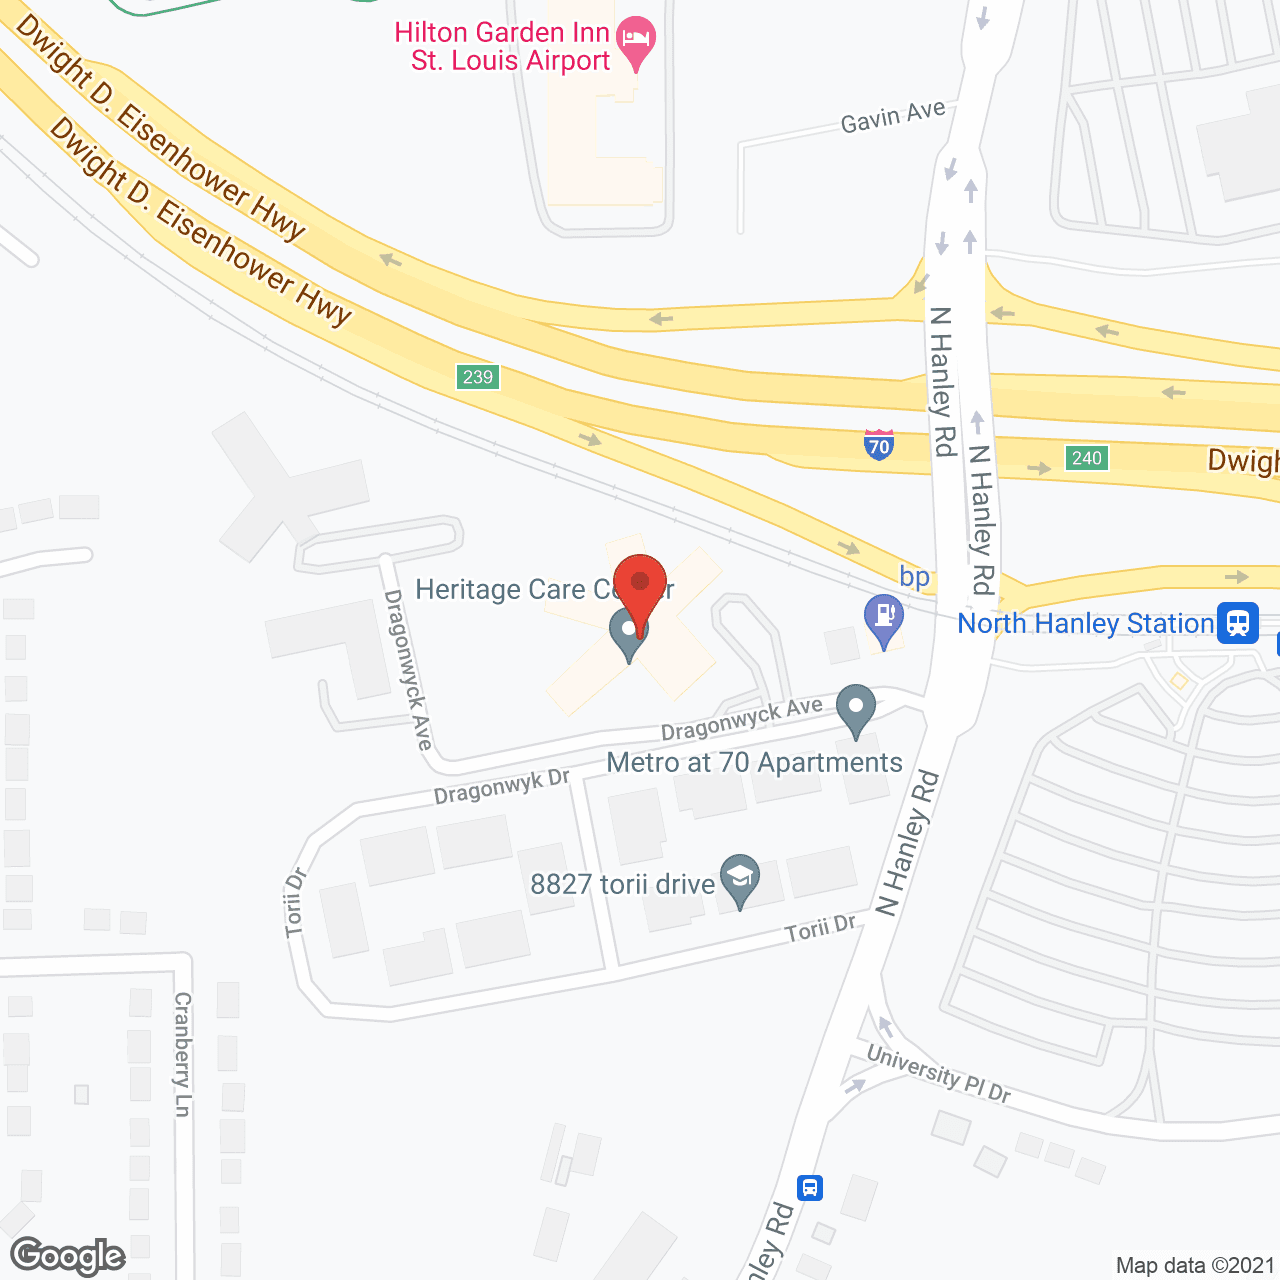 Heritage Care Center of Berkeley, L.L.C. in google map